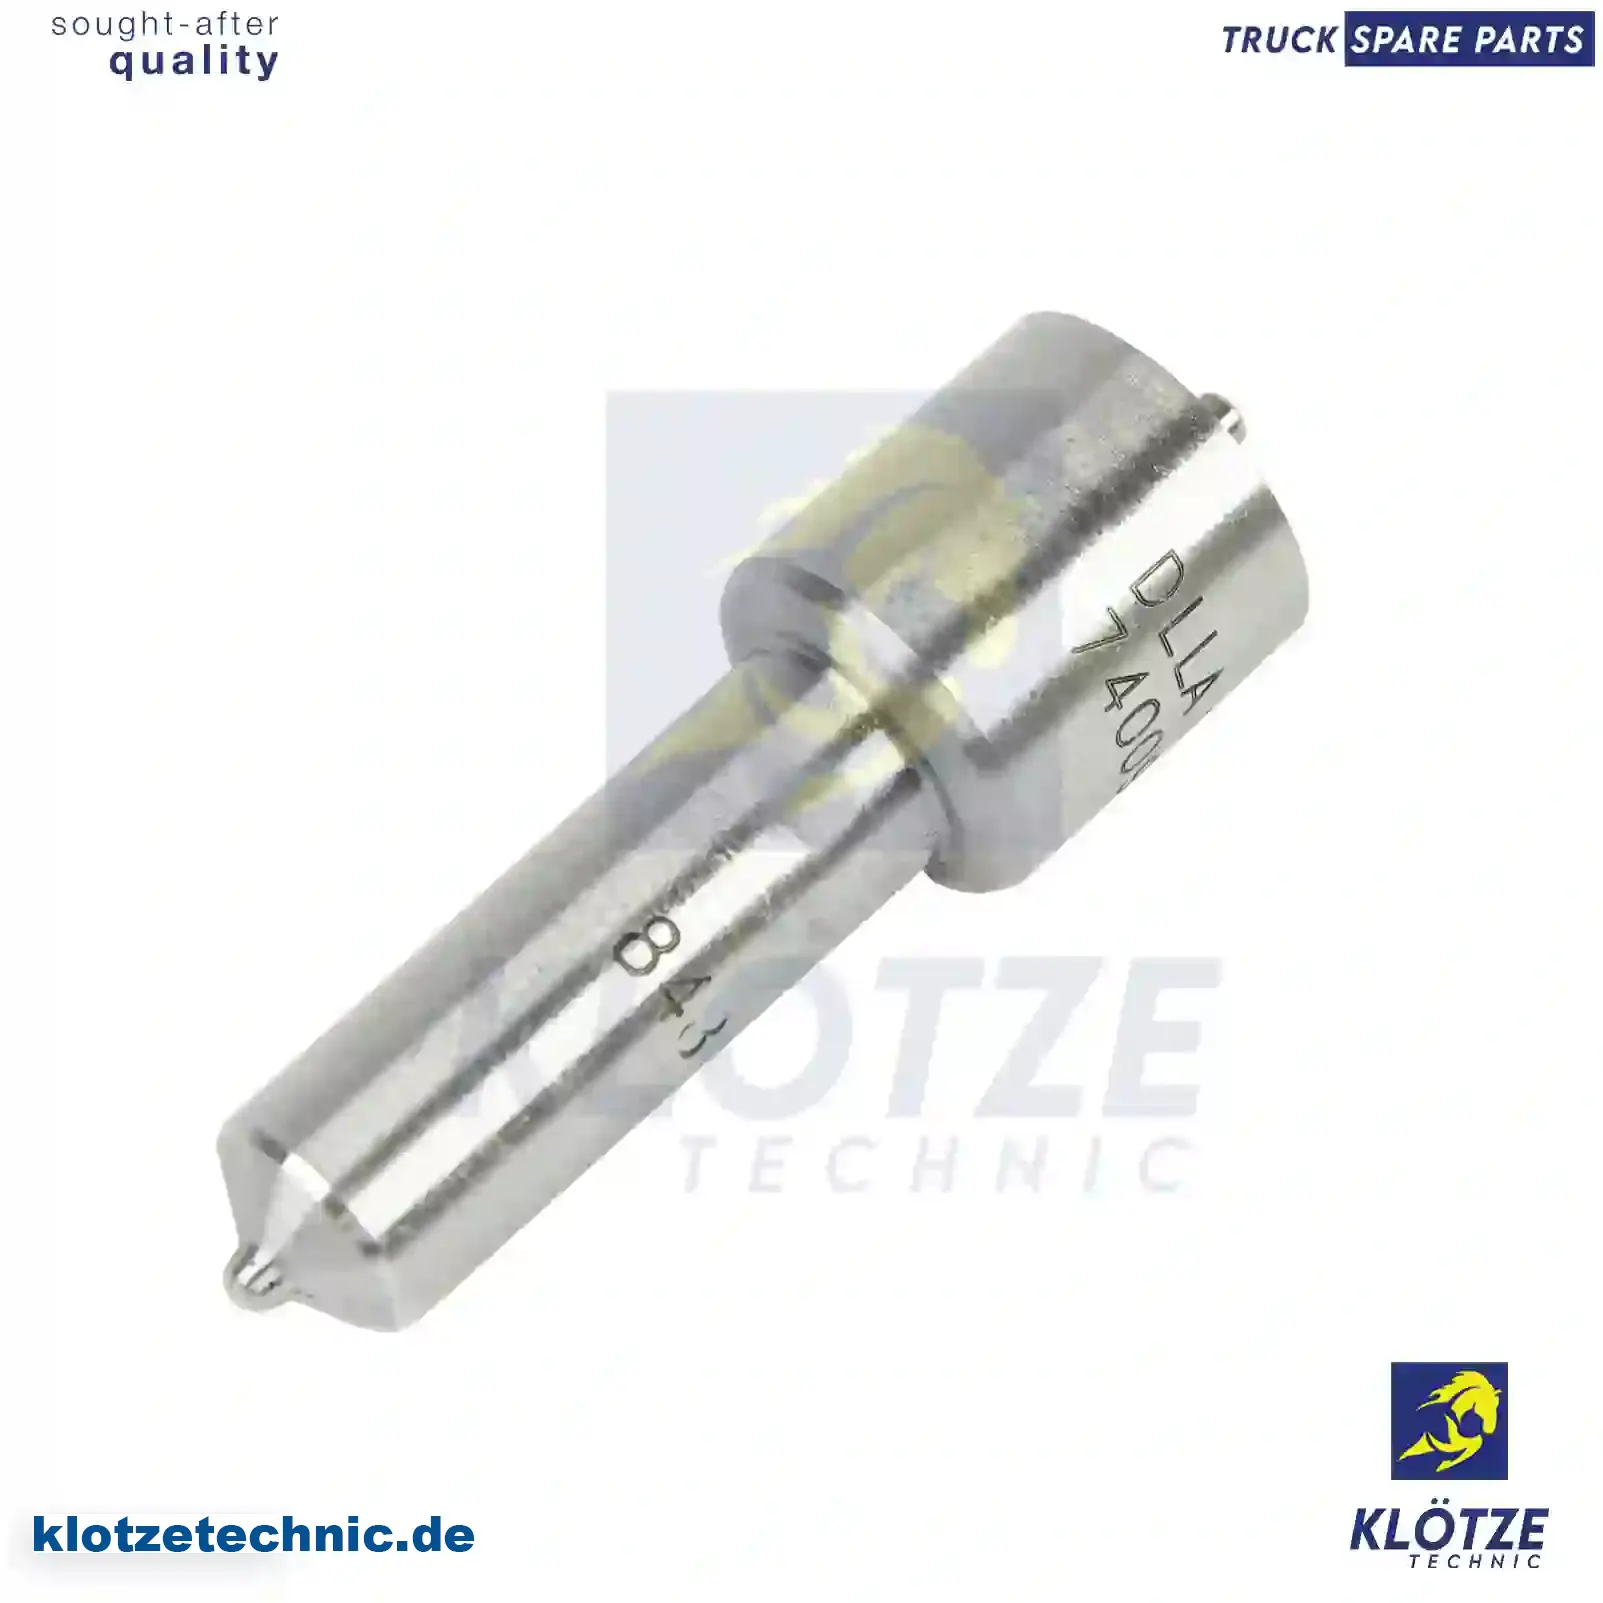 Injection nozzle, 51101020252 || Klötze Technic